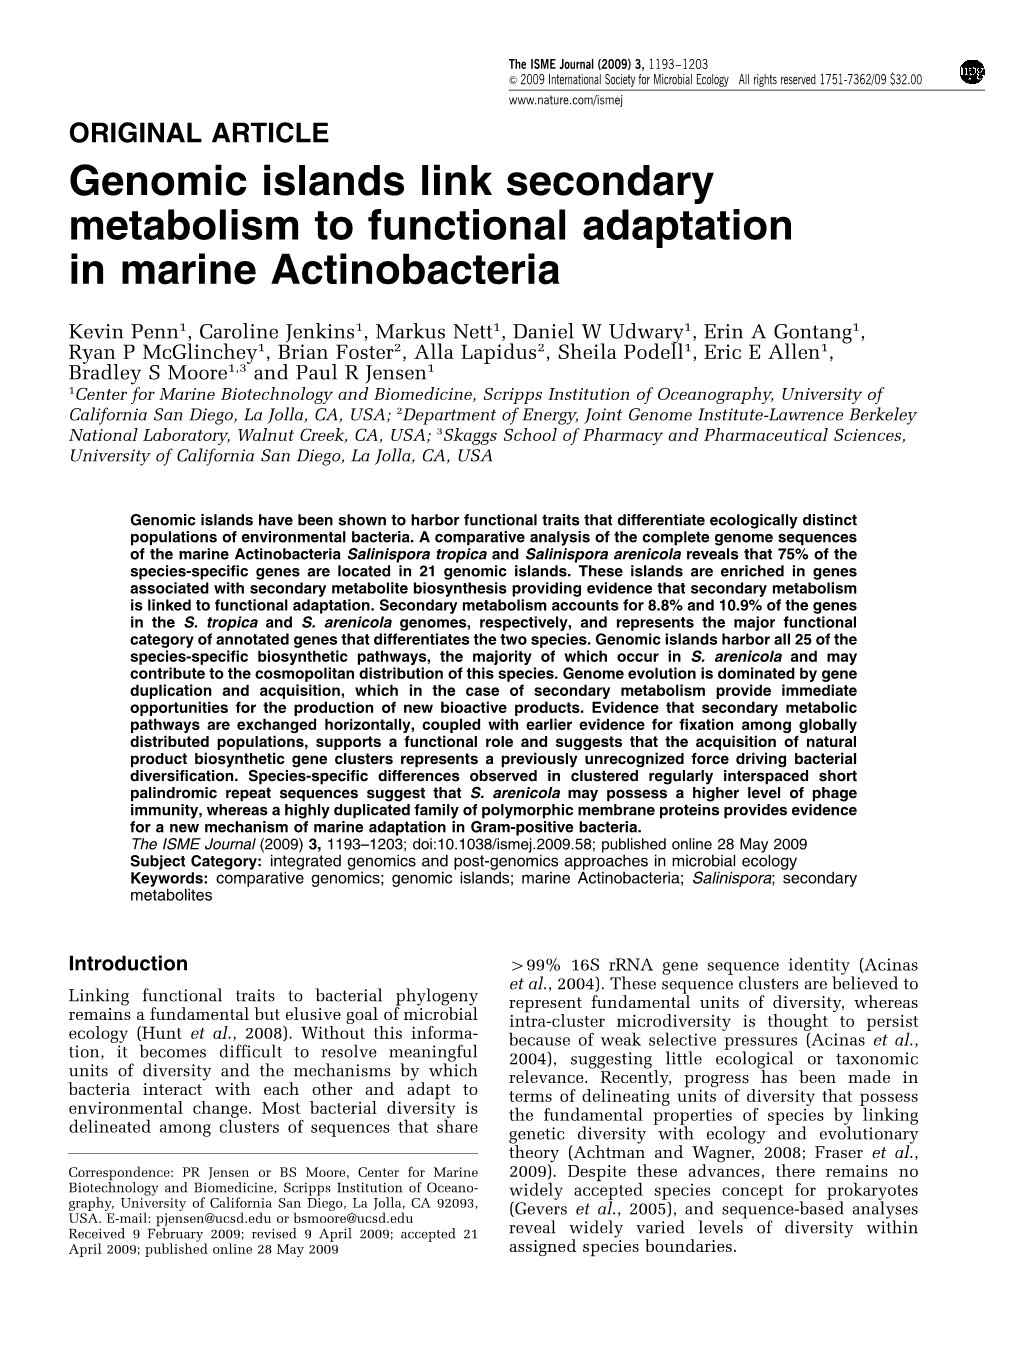 Genomic Islands Link Secondary Metabolism to Functional Adaptation in Marine Actinobacteria